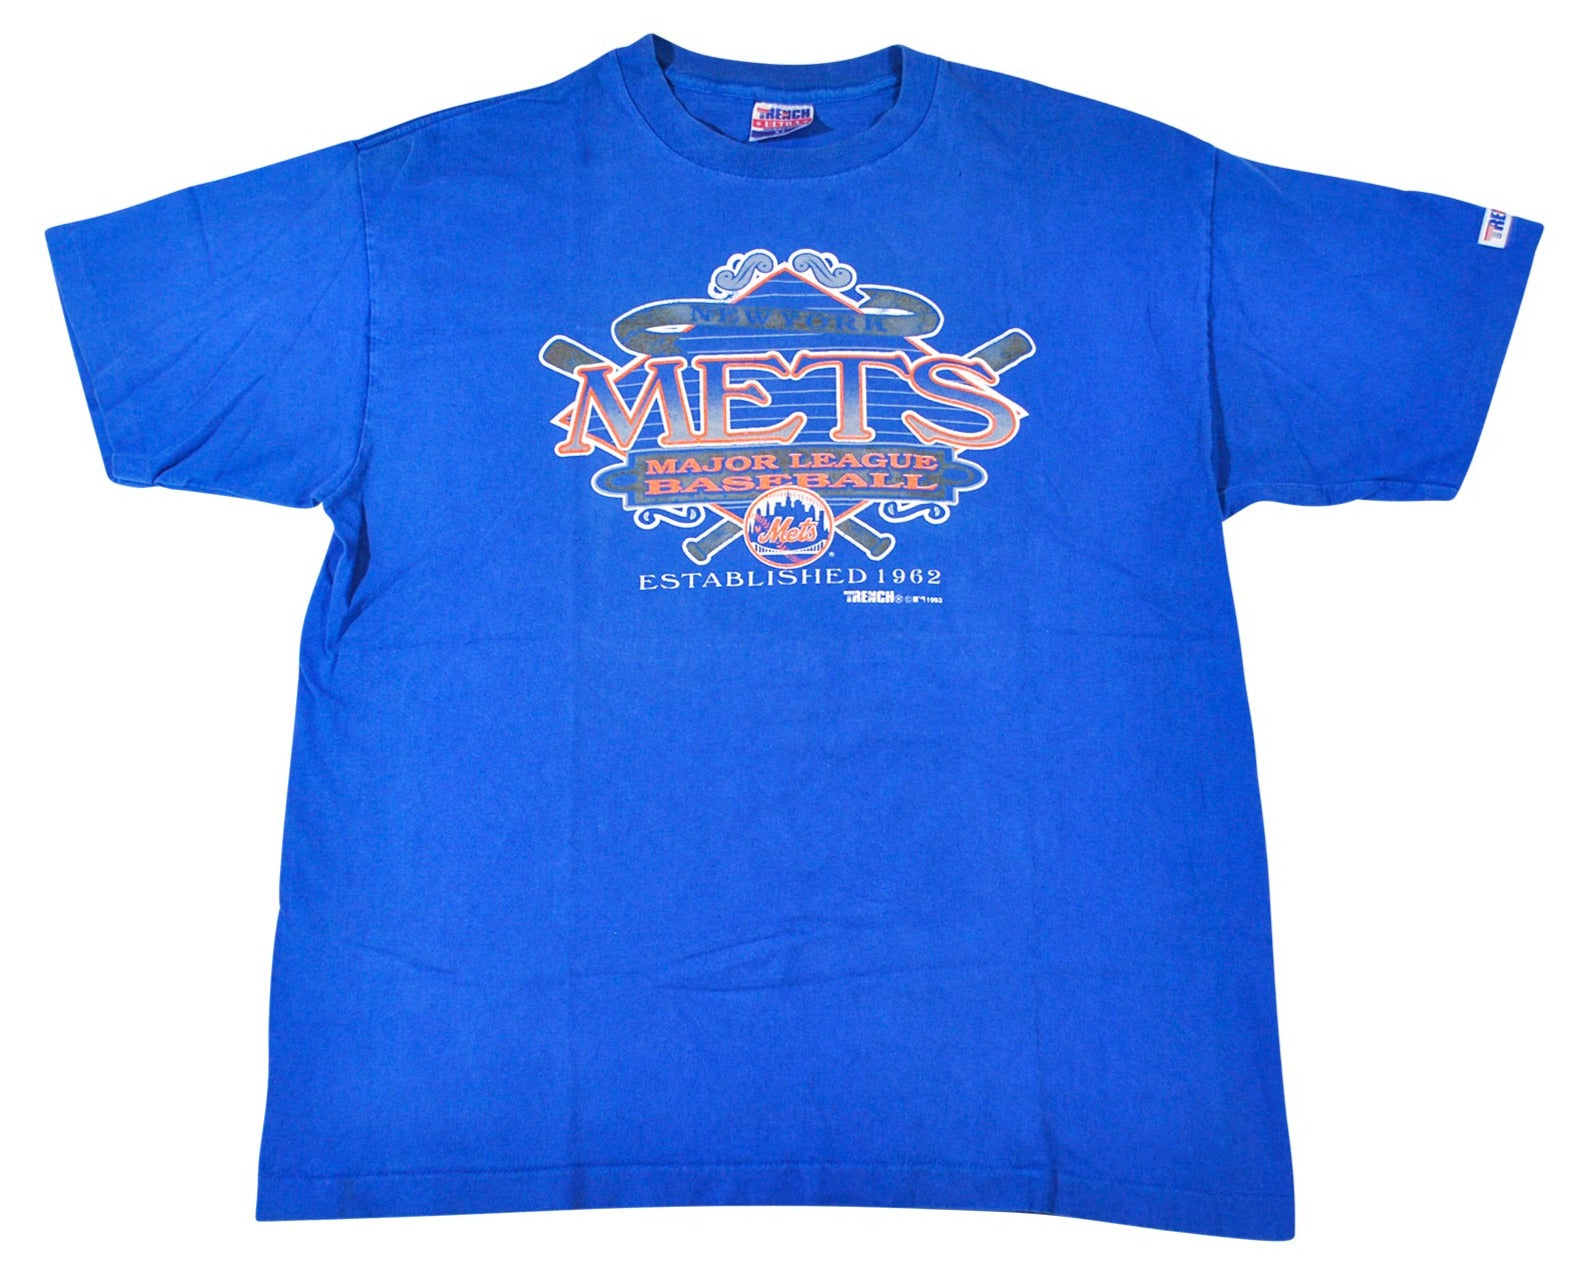 TRENCH - New York Mets Tee Shirt